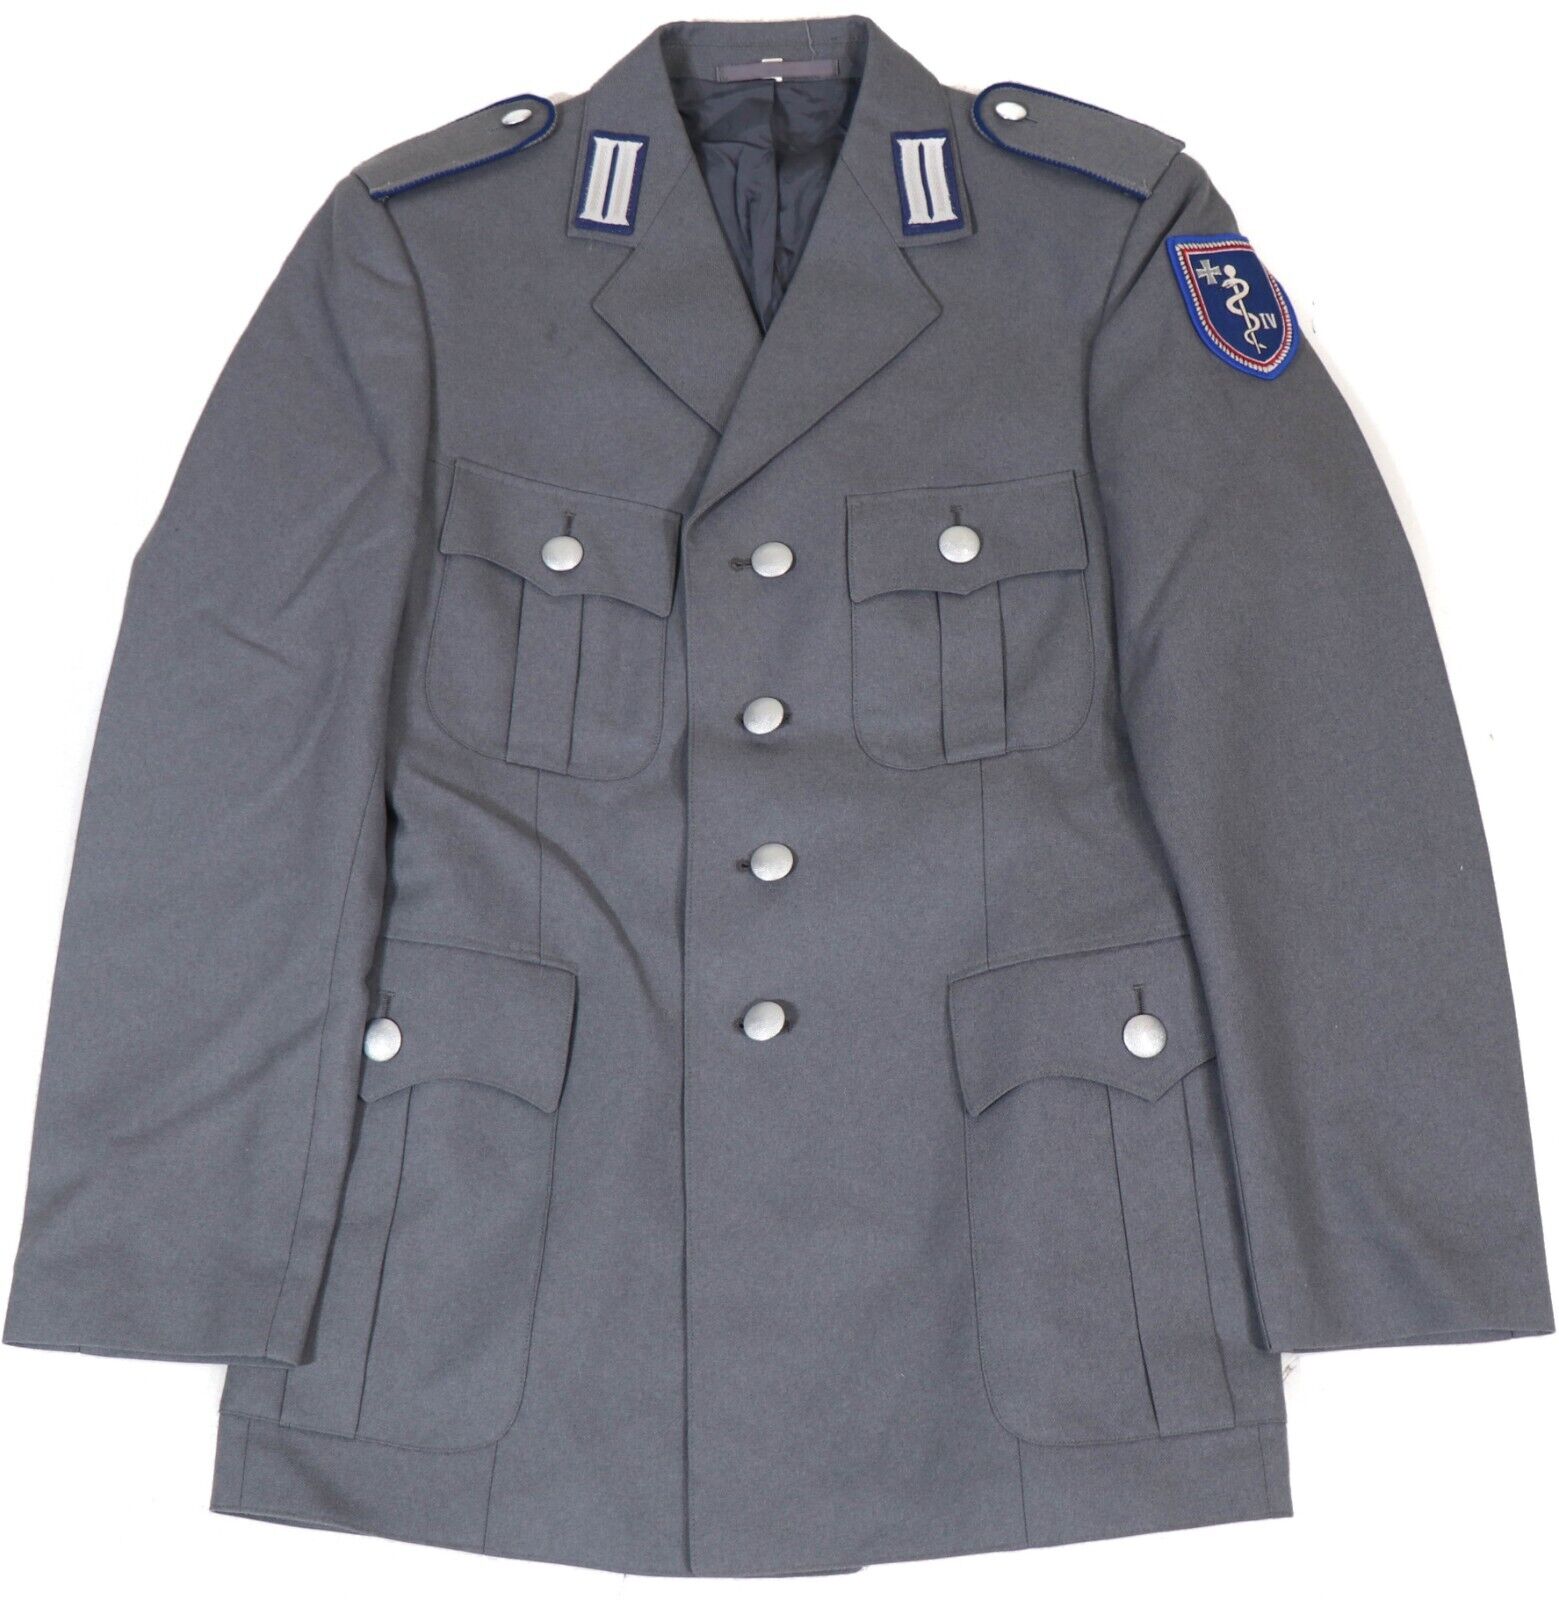 XXLarge - Blue West German Army Bundeswehr Grey Army Officer Jacket Tunic